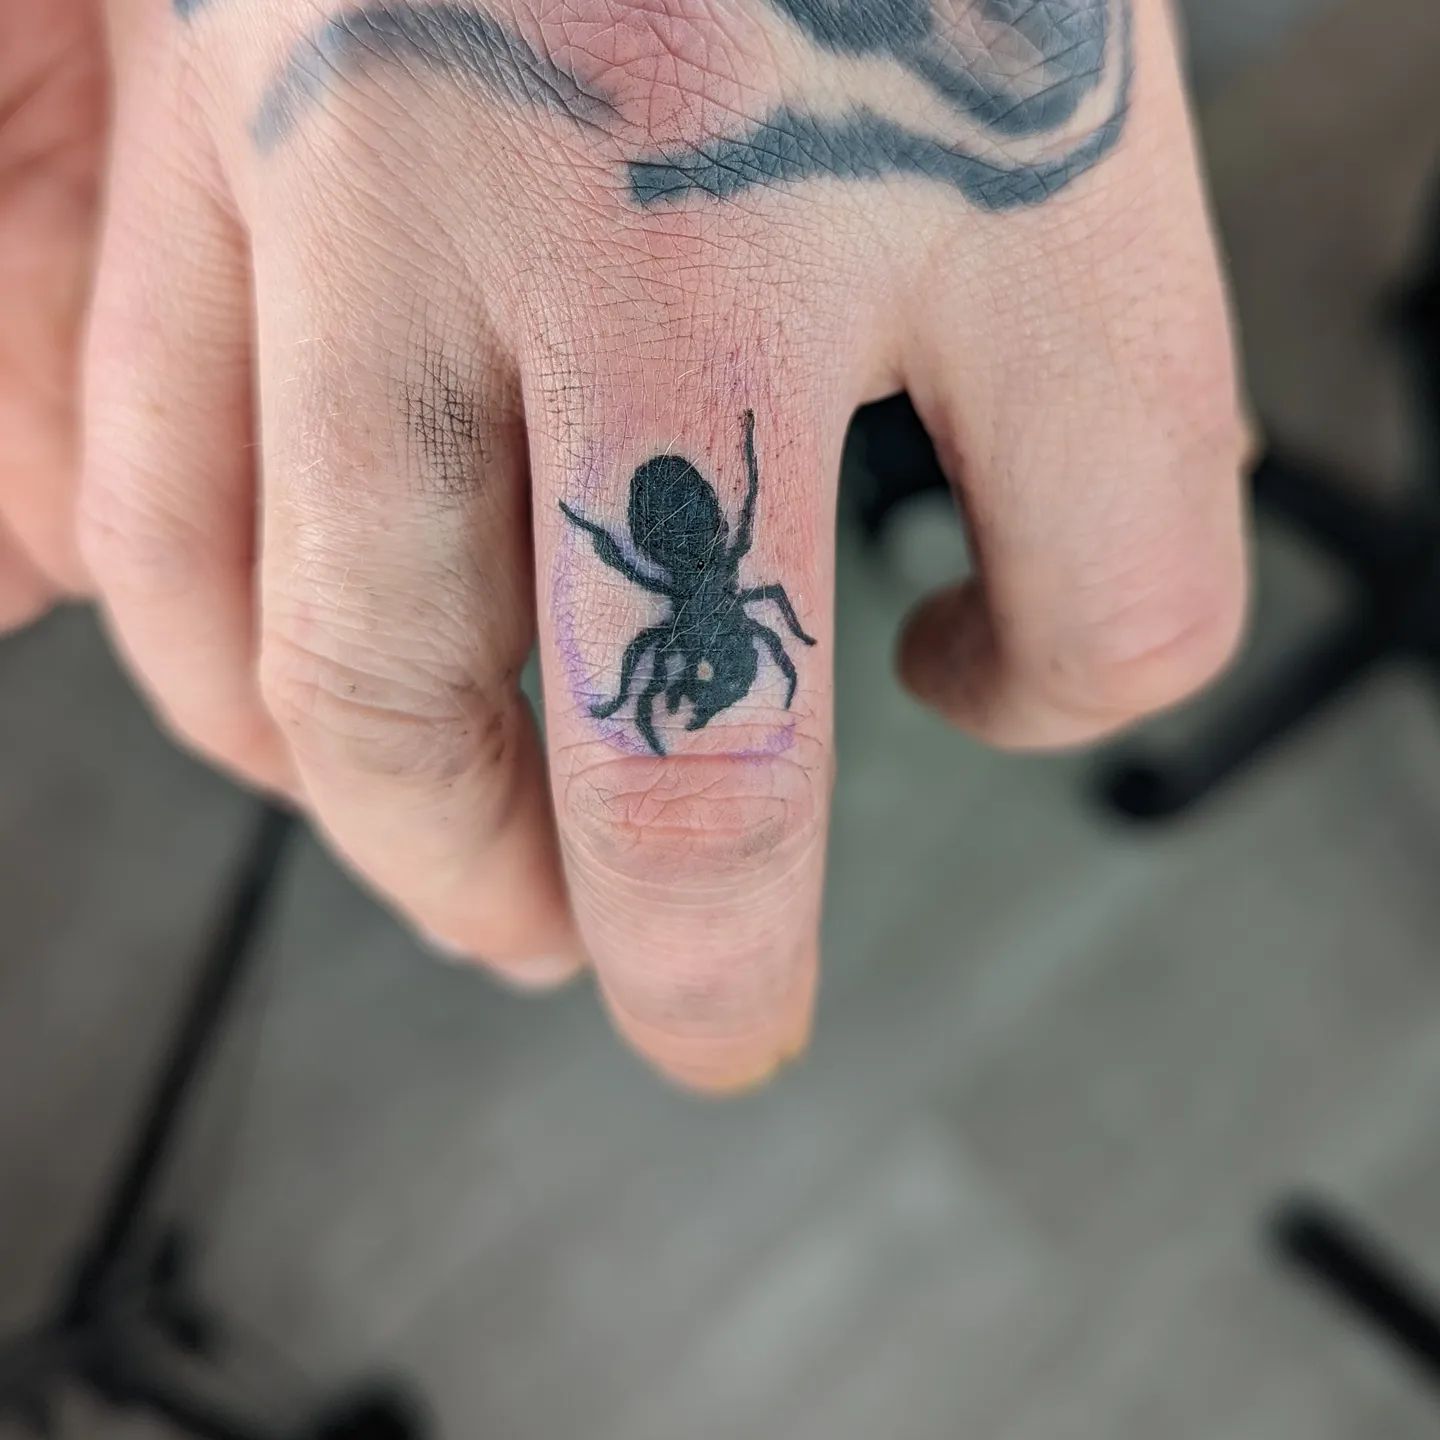 Tatuaje de Araña en el Dedo